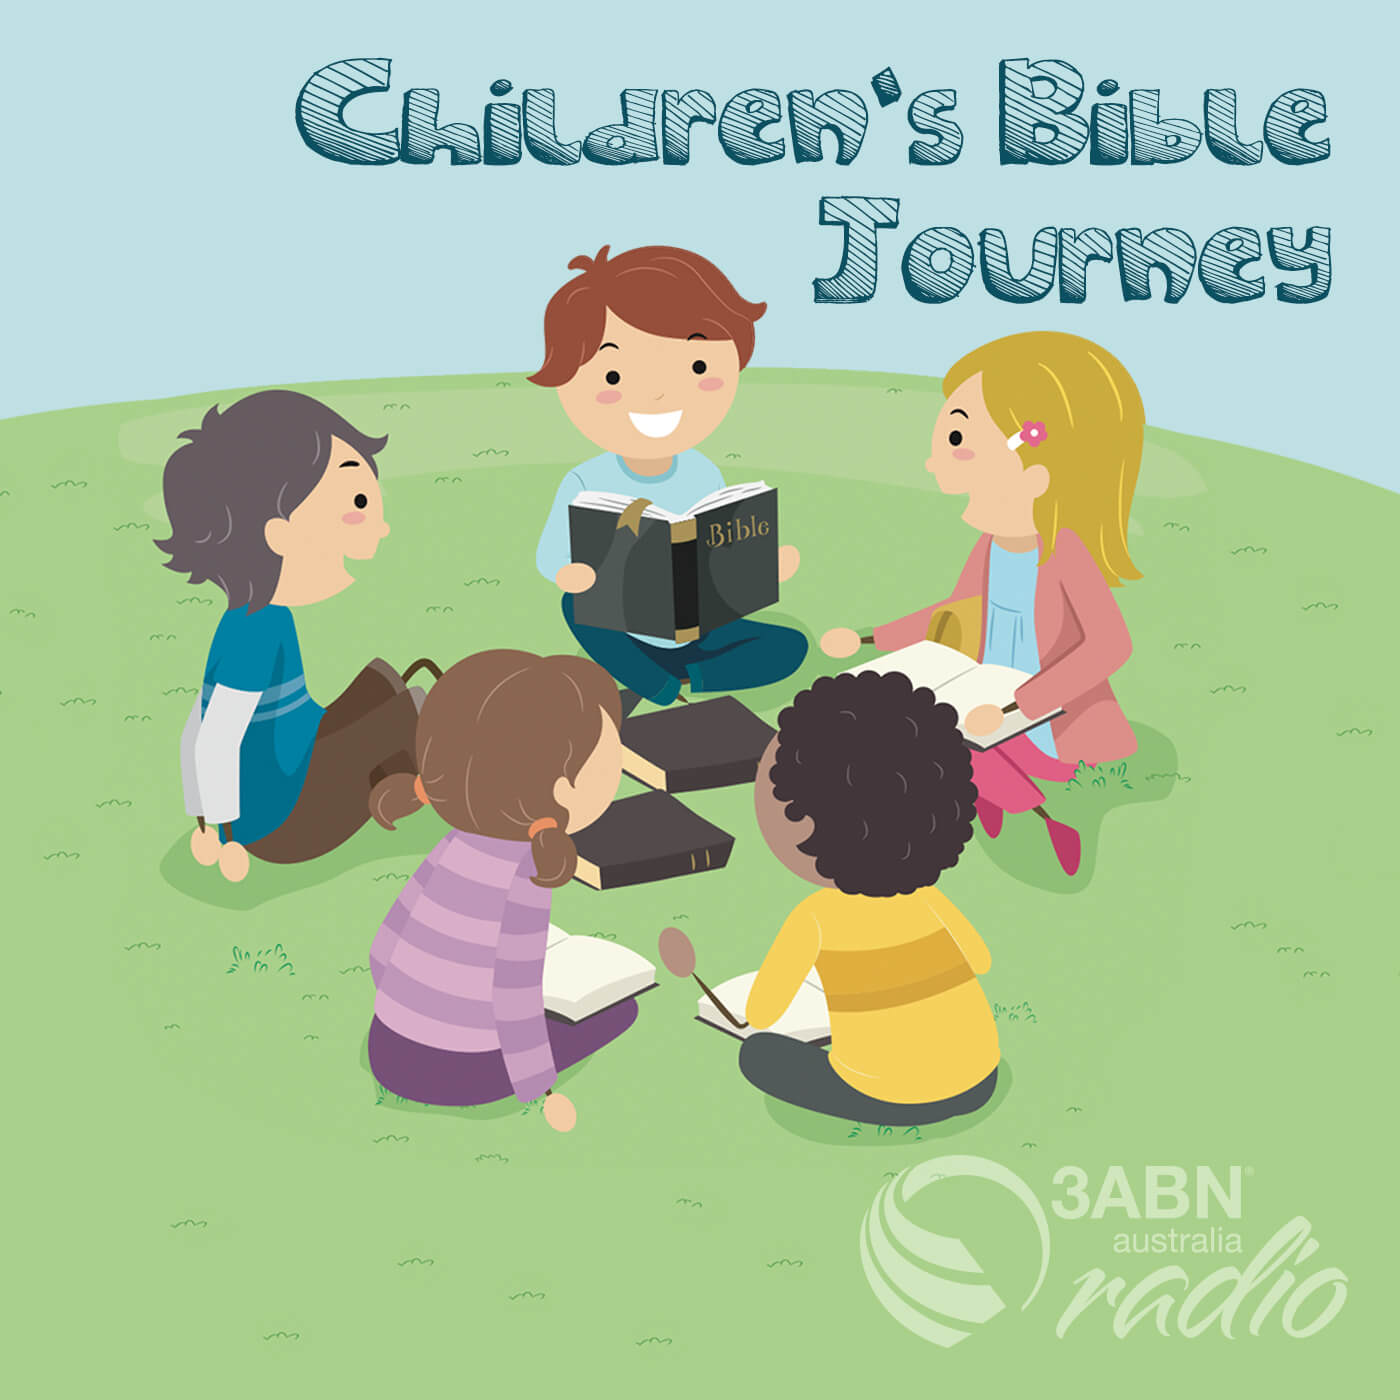 Children's Bible Journey - 2206